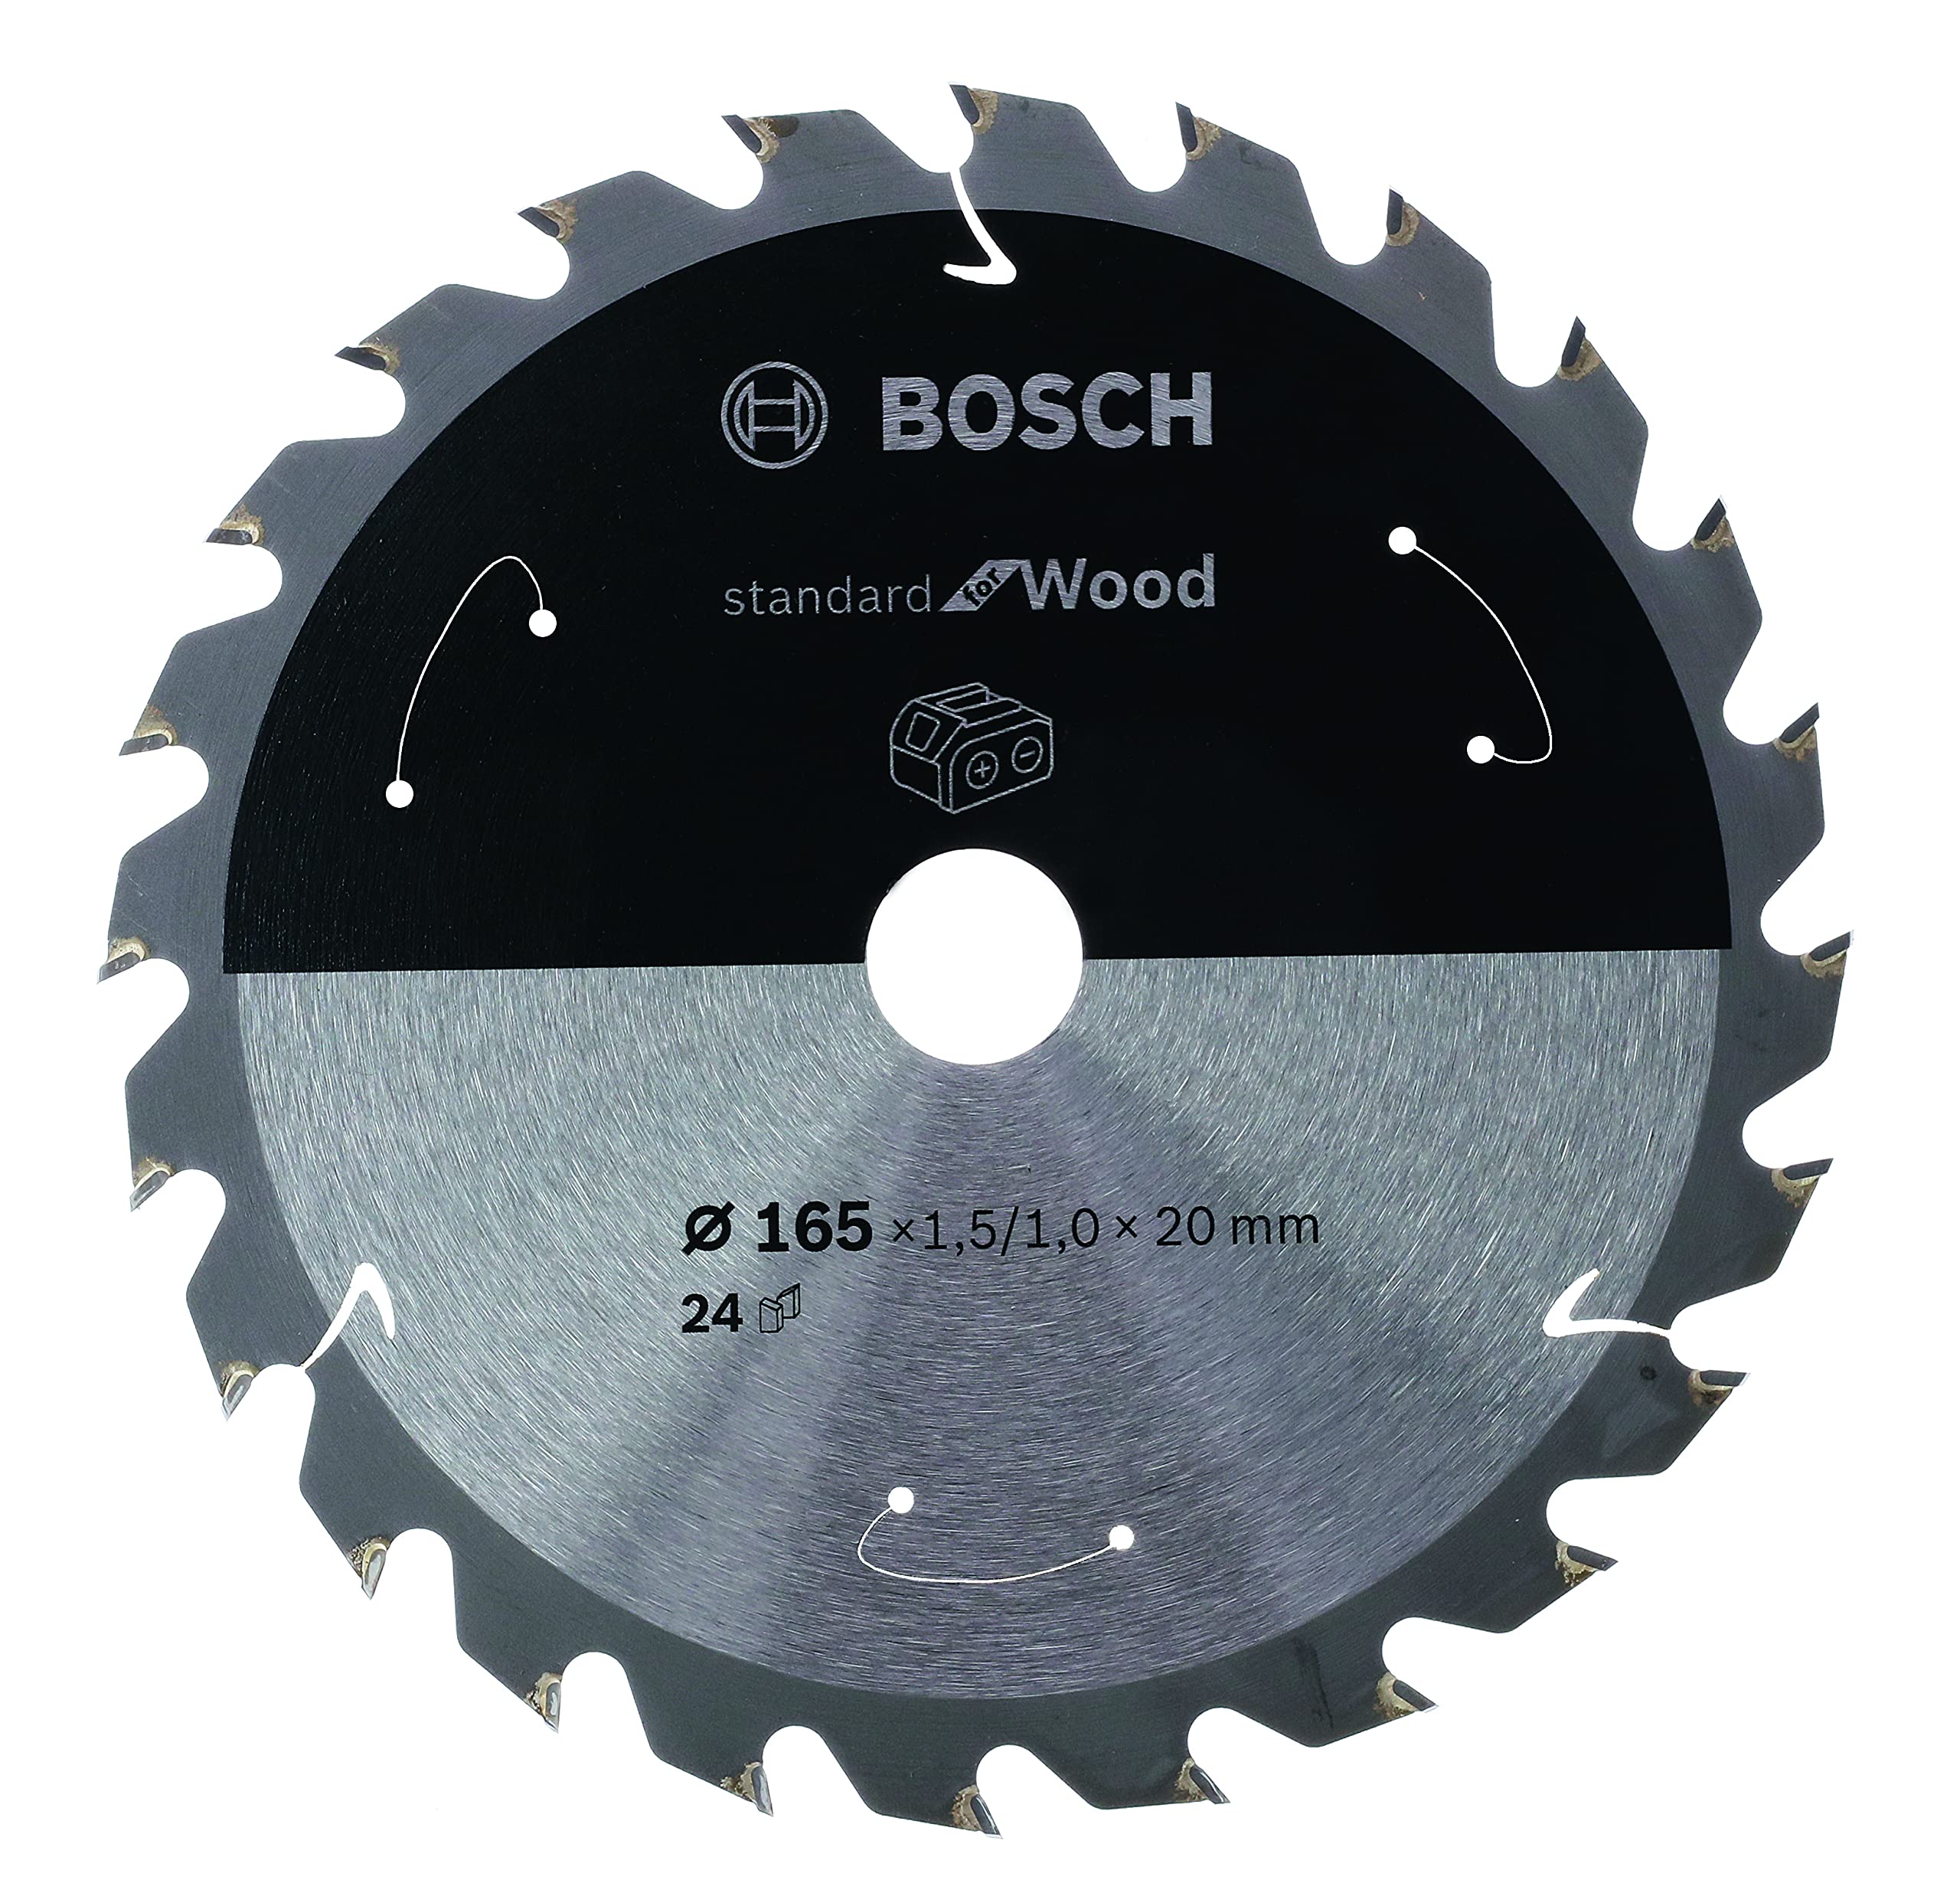 Bosch Accessories 1x Kreissägeblatt Standard for Wood (Holz, Sägeblatt Ø 165 x 20 x 1,5 mm, 24 Zähne, Zubehör Akku Kreissäge)